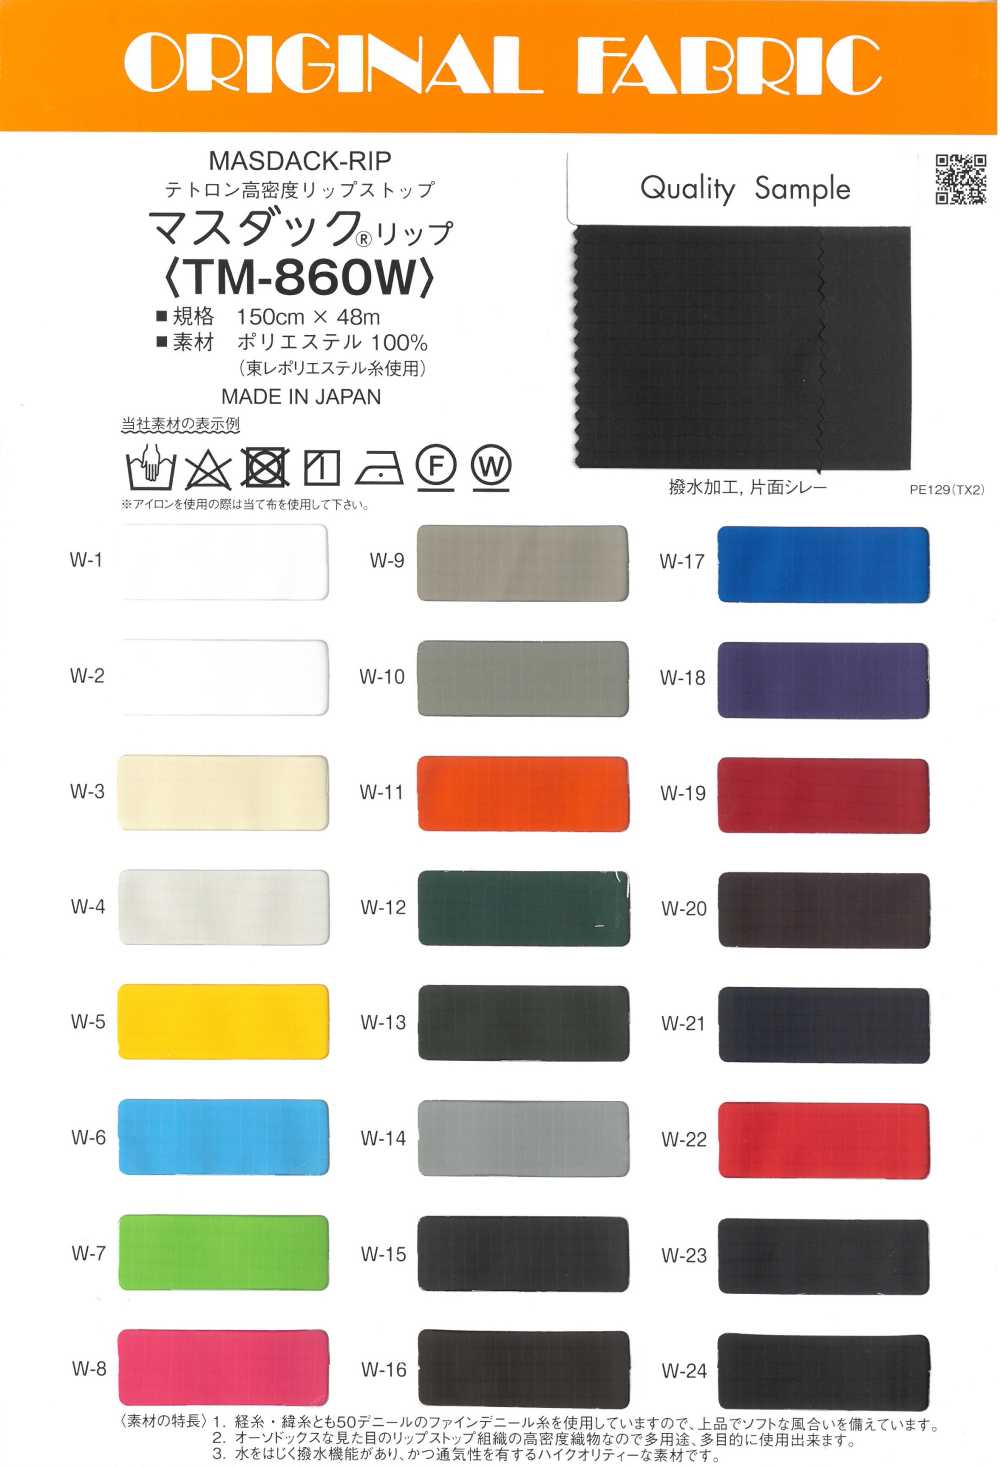 TM860W Masdaq® Lip Tetron High Density Ripstop[Textilgewebe] Masuda